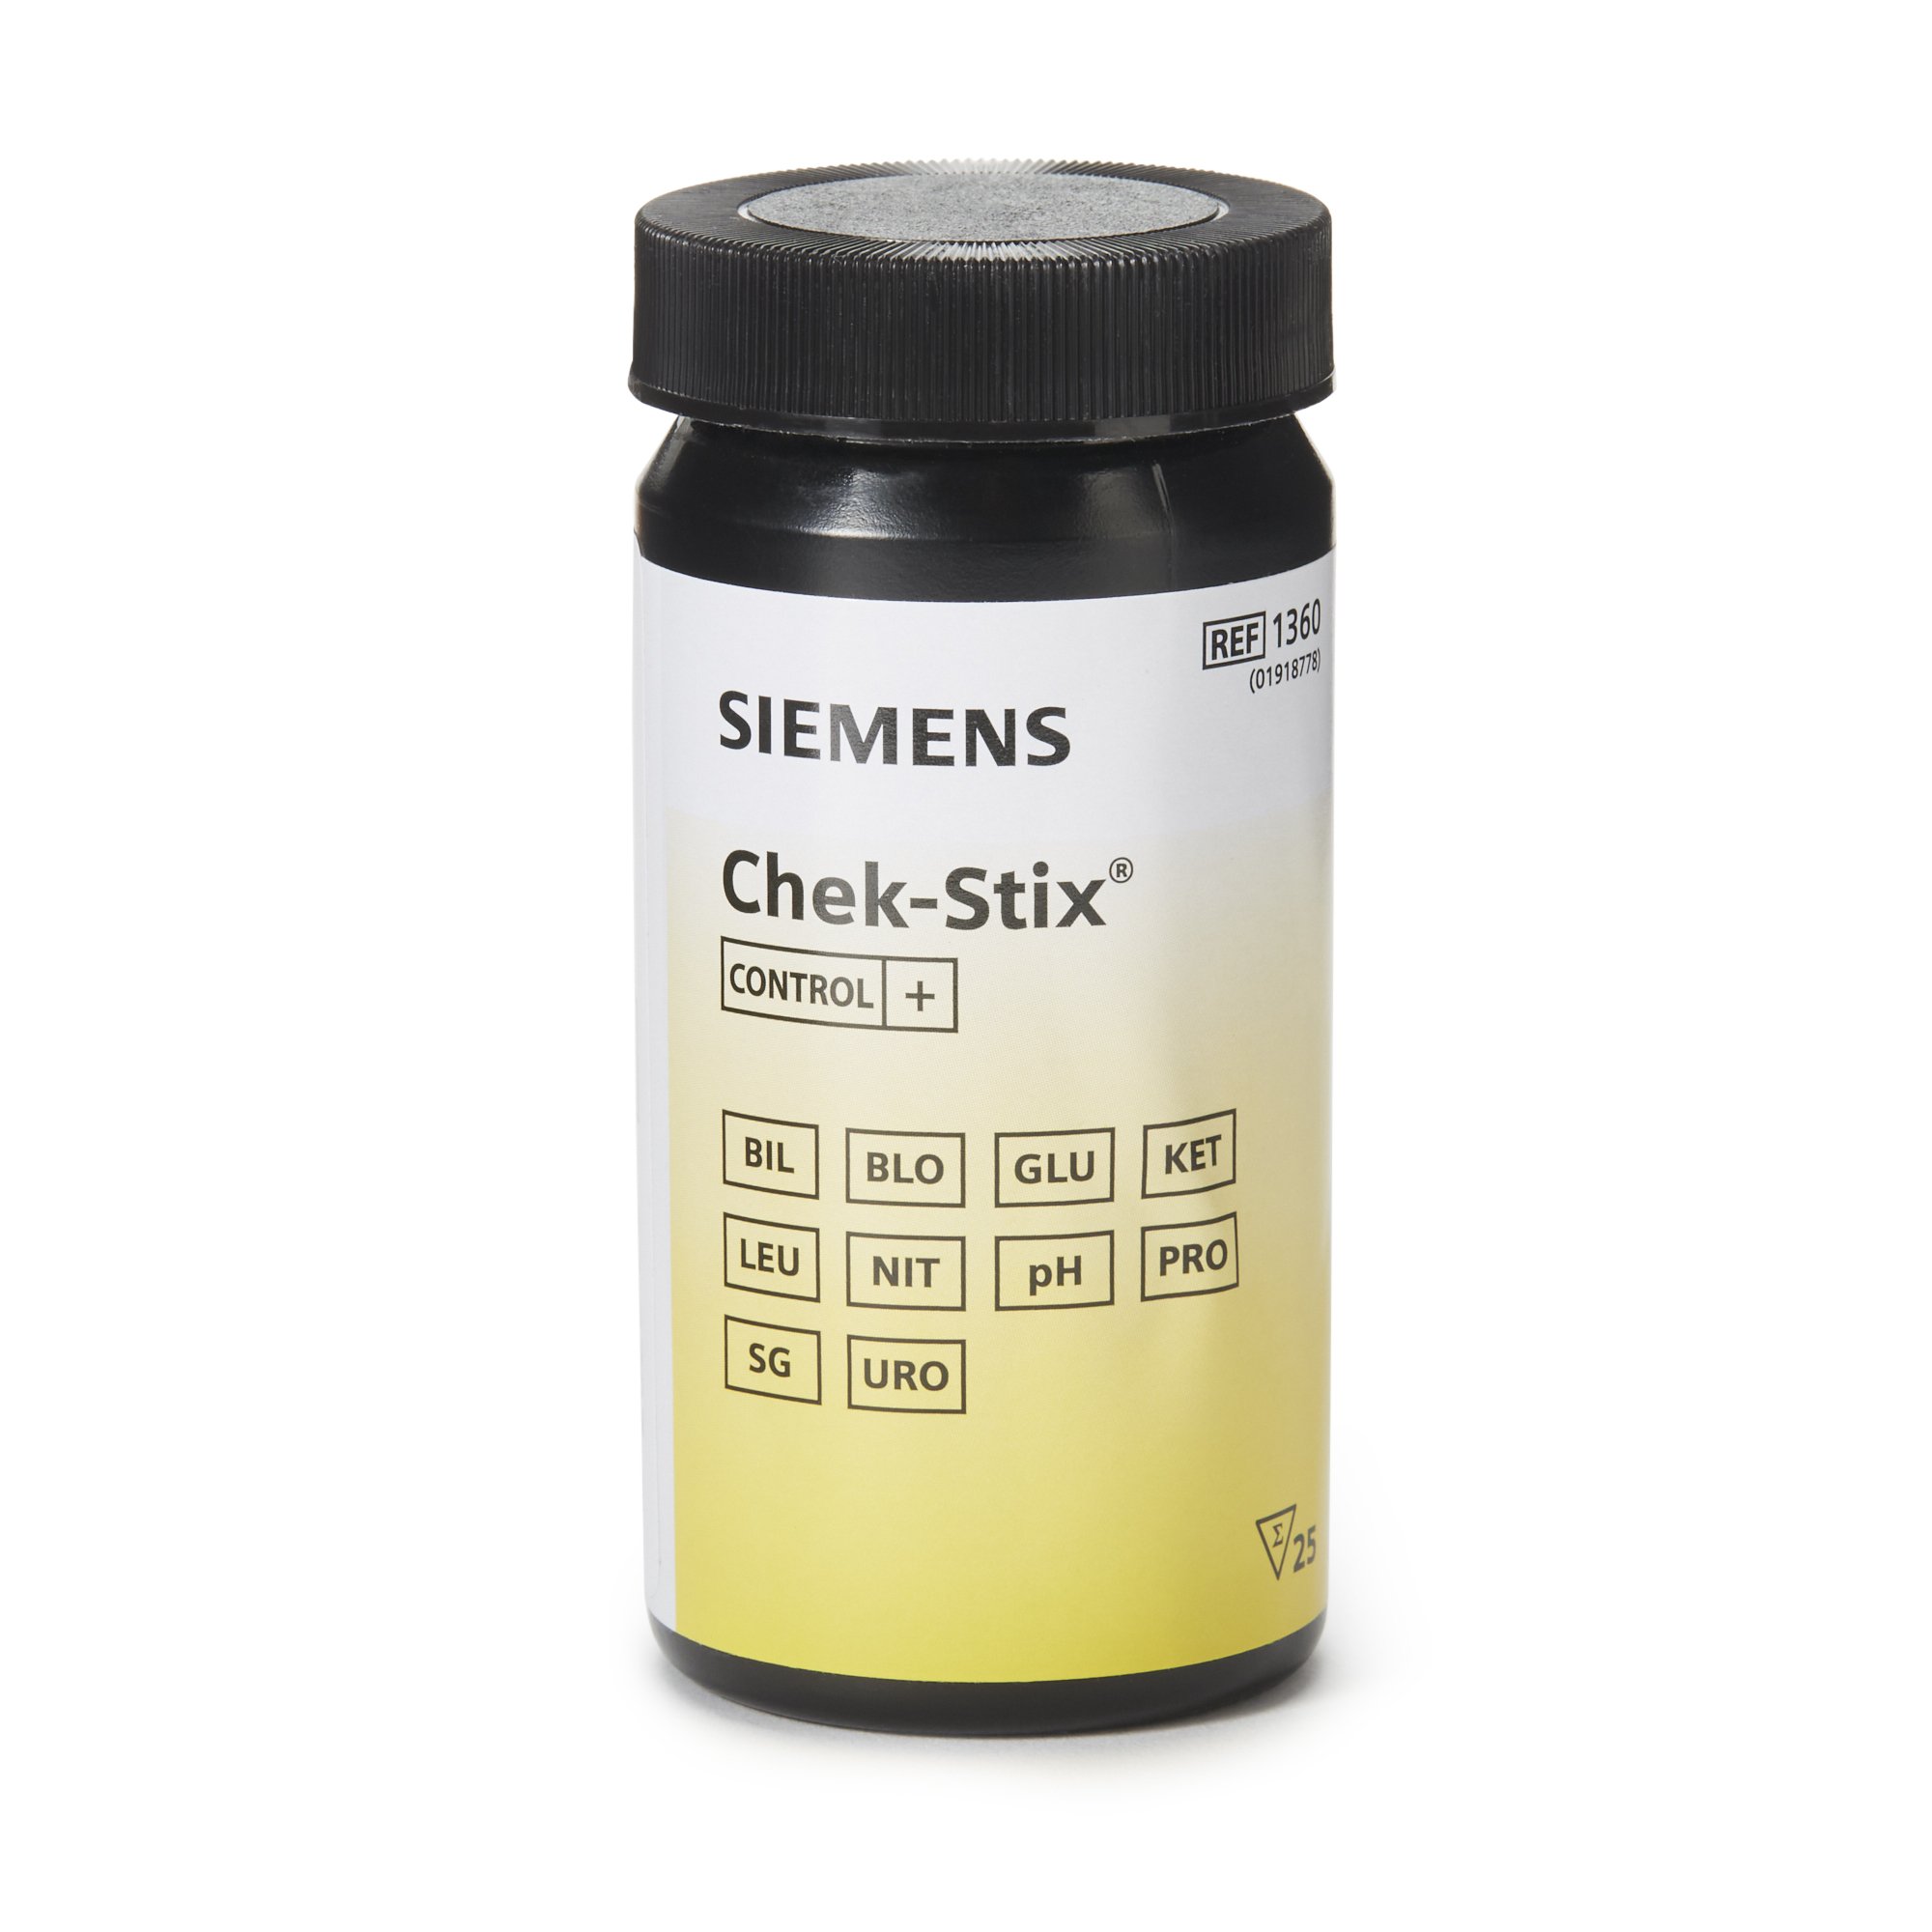 Chek-Stix Siemens Positive Control image 0